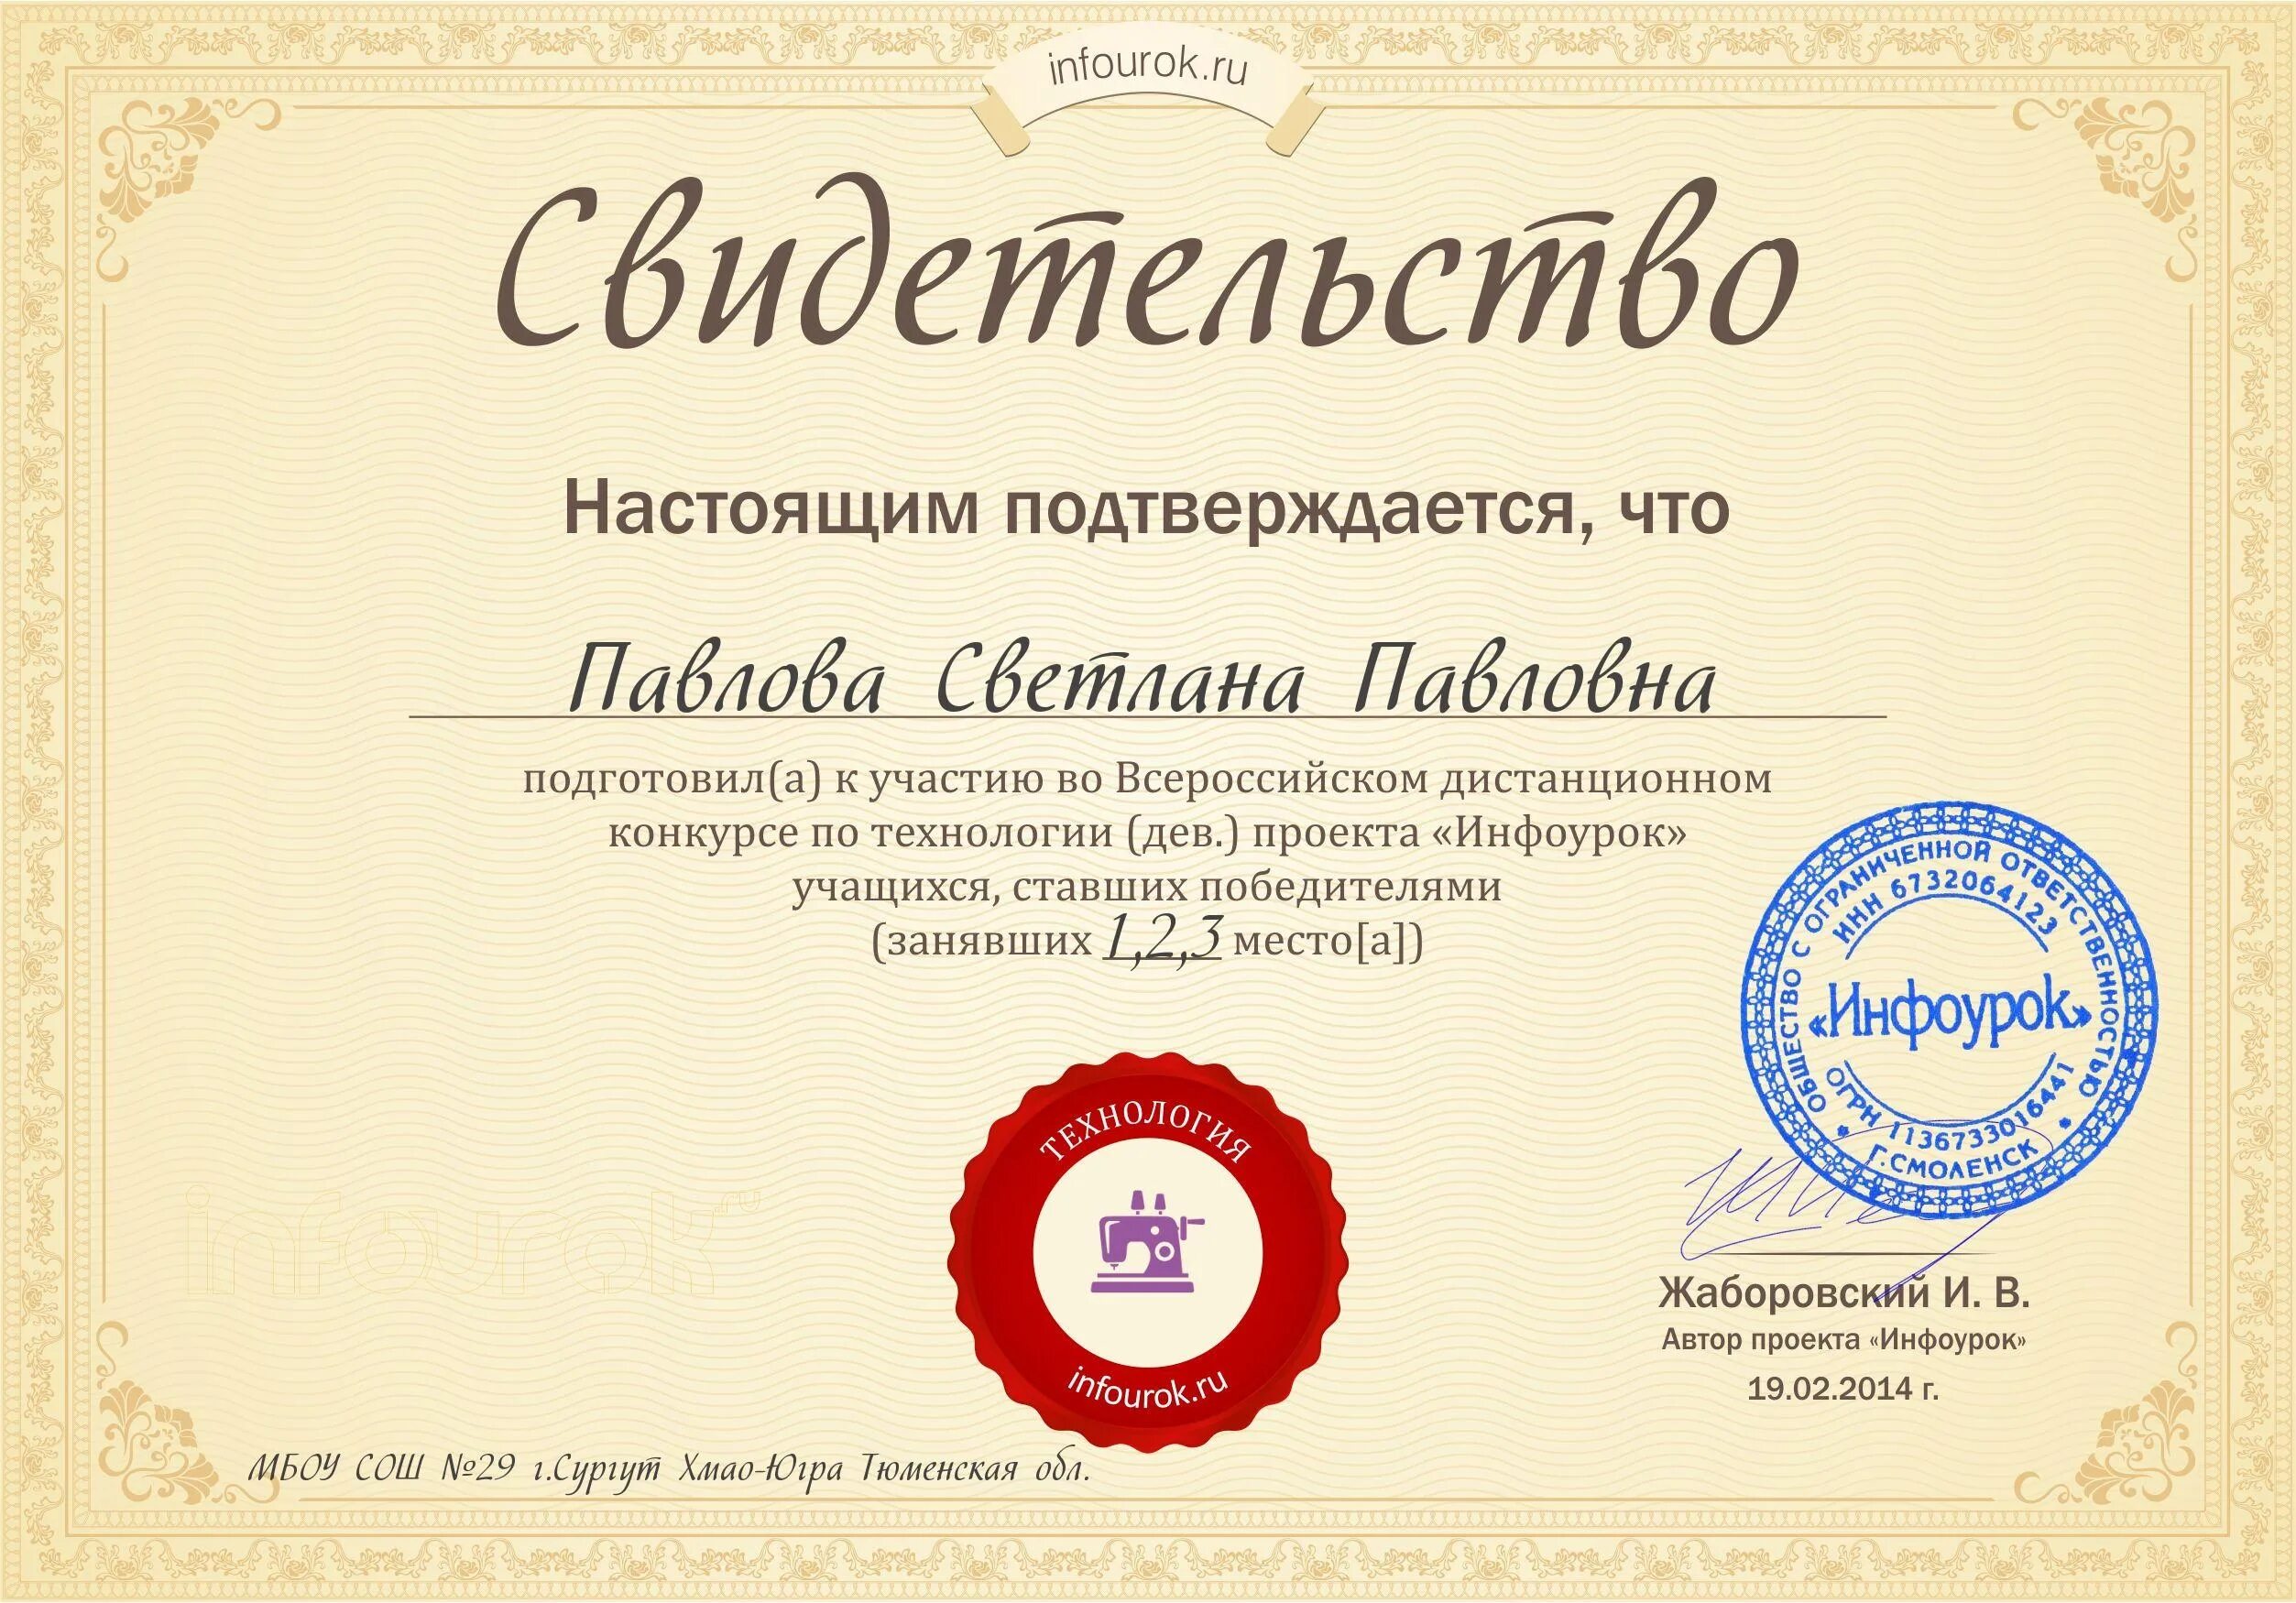 1 infourok ru. Свидетельство Инфоурок. Сертификат Инфоурок. Сертификат о публикации учителя информатики. Инфоурок дипломы сертификаты.